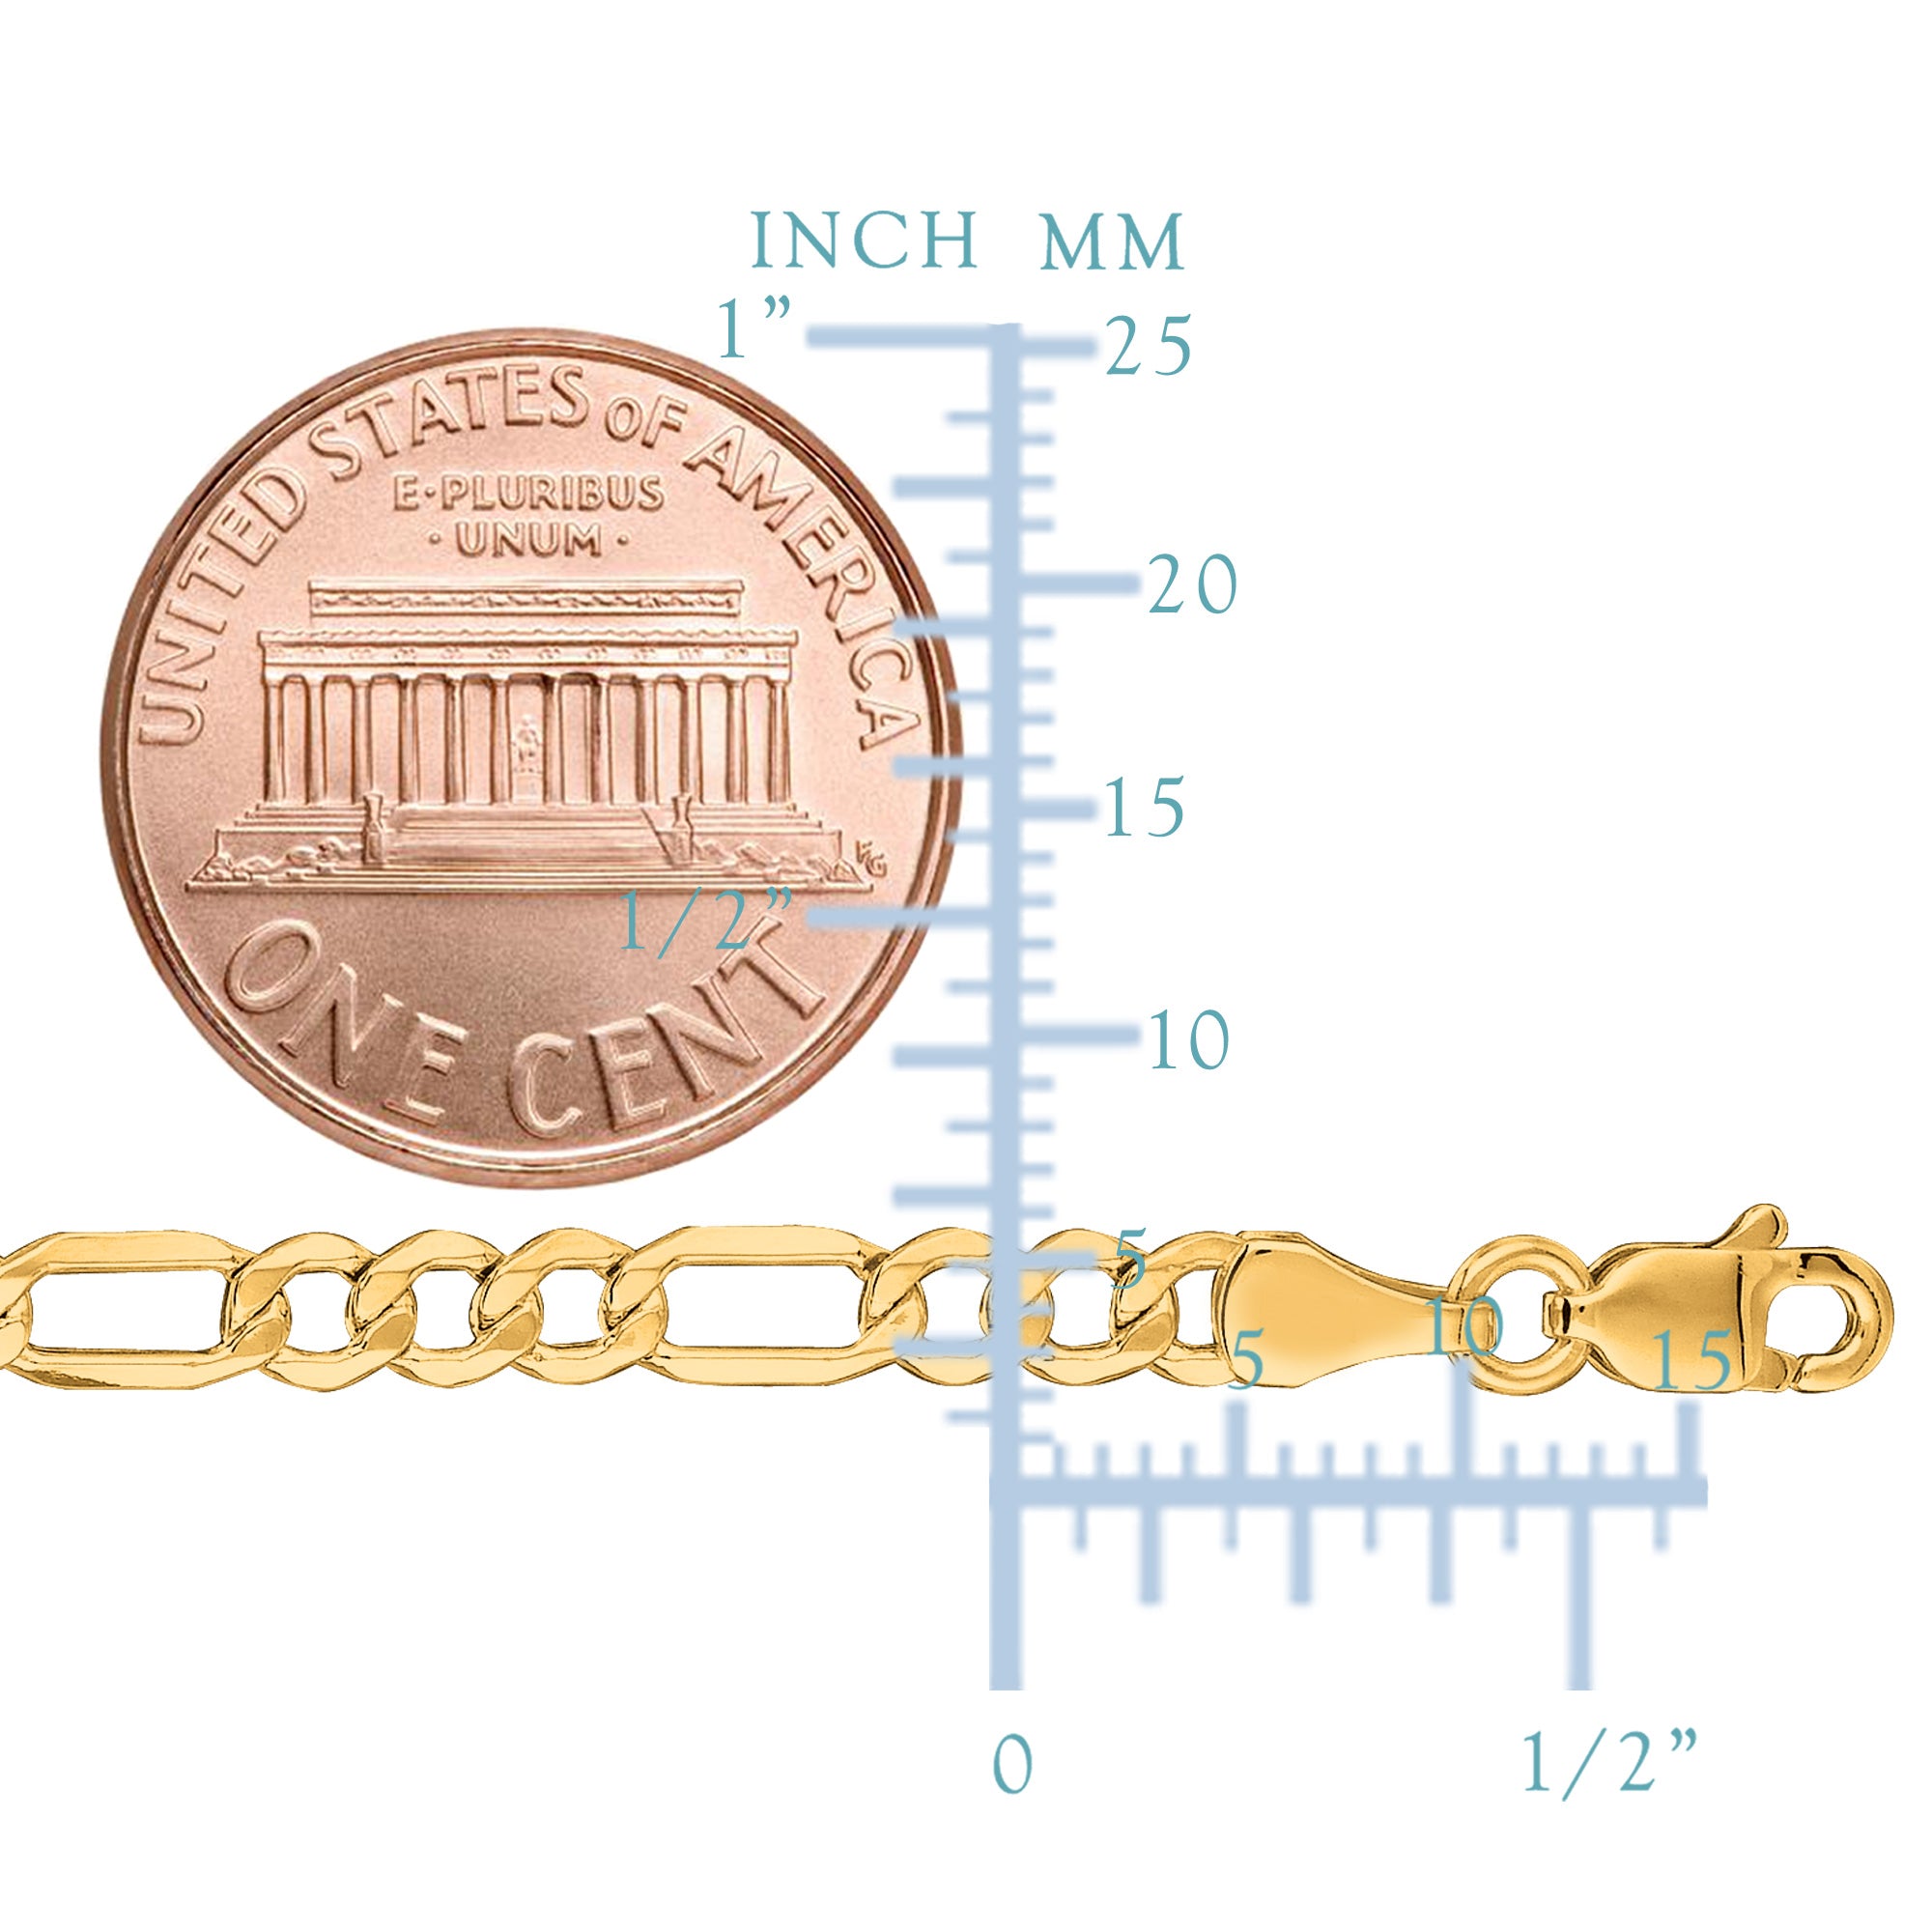 14k Yellow Gold Hollow Figaro Chain Bracelet, 3.5mm, 8.5" fine designer jewelry for men and women